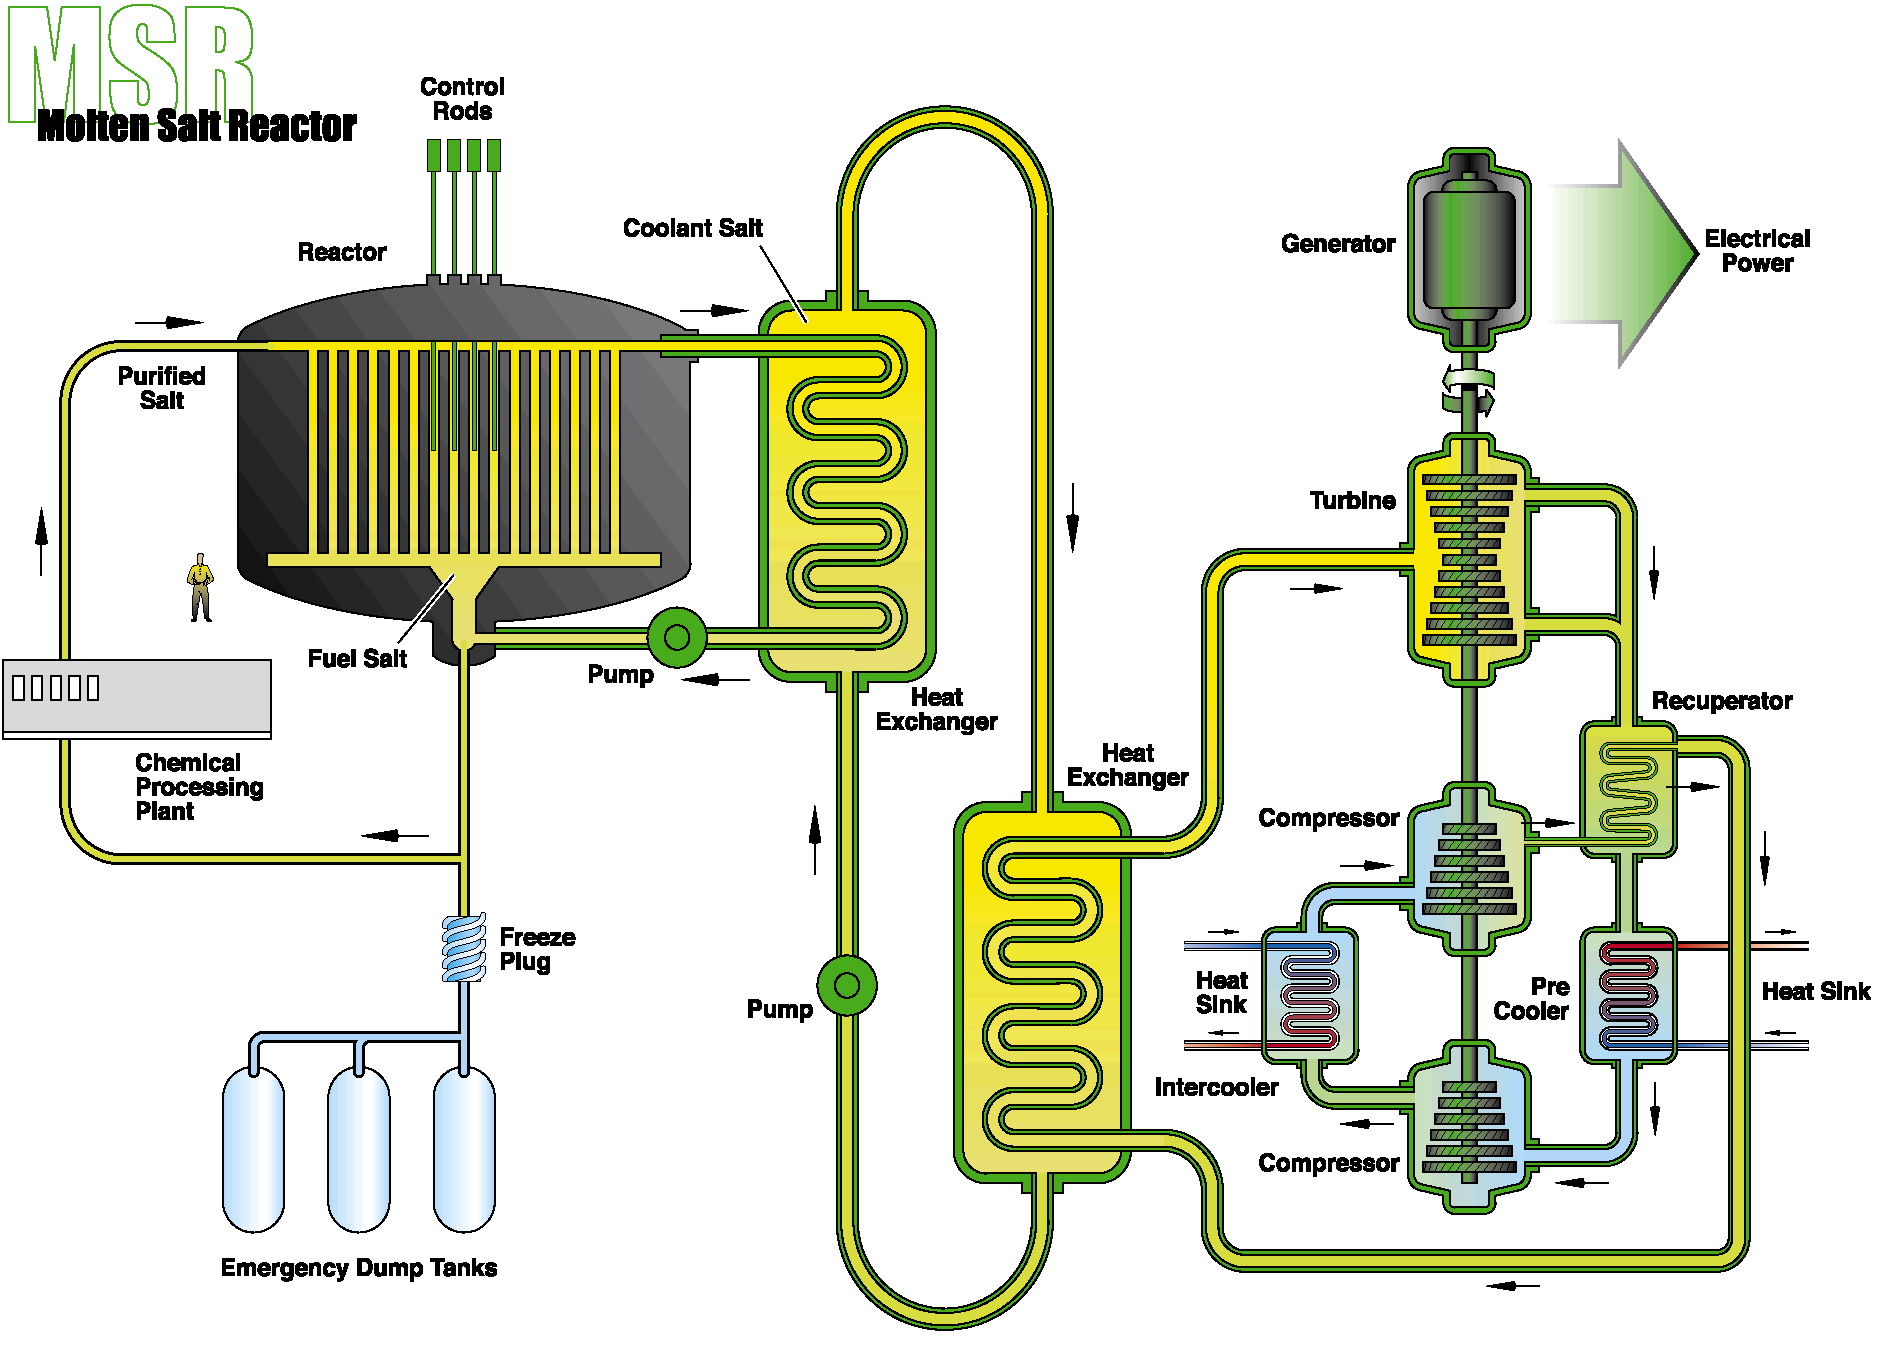 Reaktor chlazený roztavenou solí Výkon 1000 MW Hustota výkonu 22 MW/m3 Účinnost 44 50% Moderátor - grafit Teplota 700